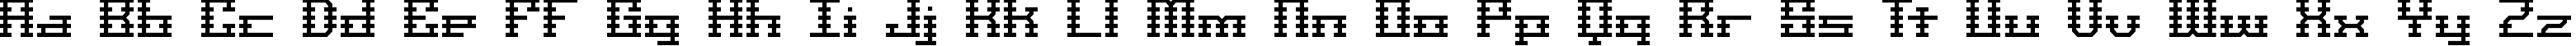 Пример написания английского алфавита шрифтом Scalelines BRK